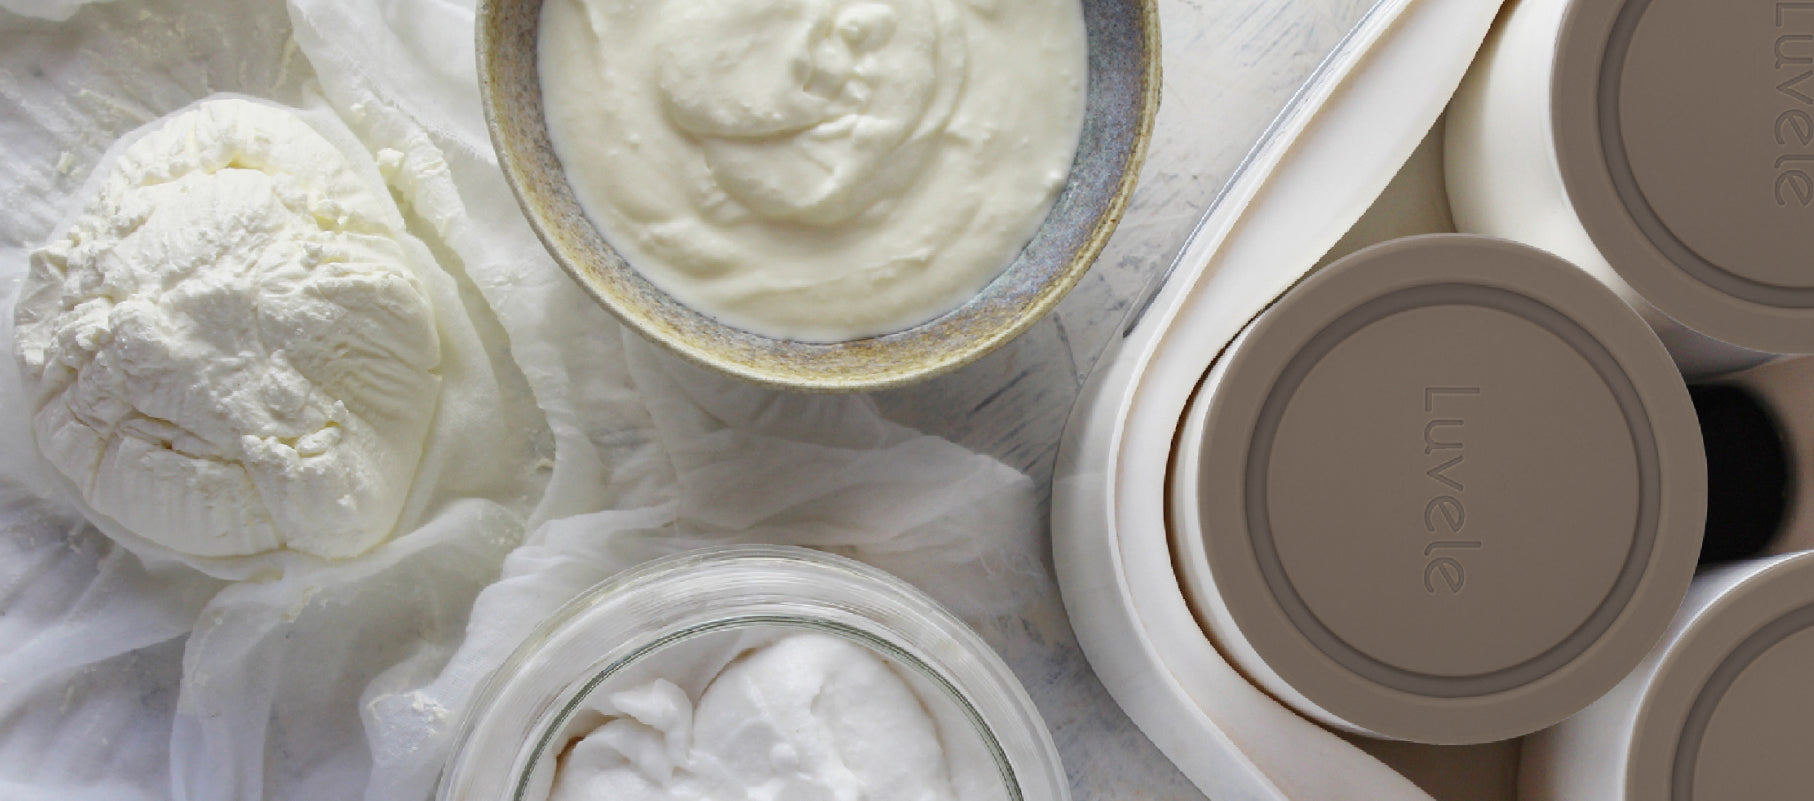 Luvele 4 x 400ml, (4 x 13.5oz.) ceramic yogurt jars